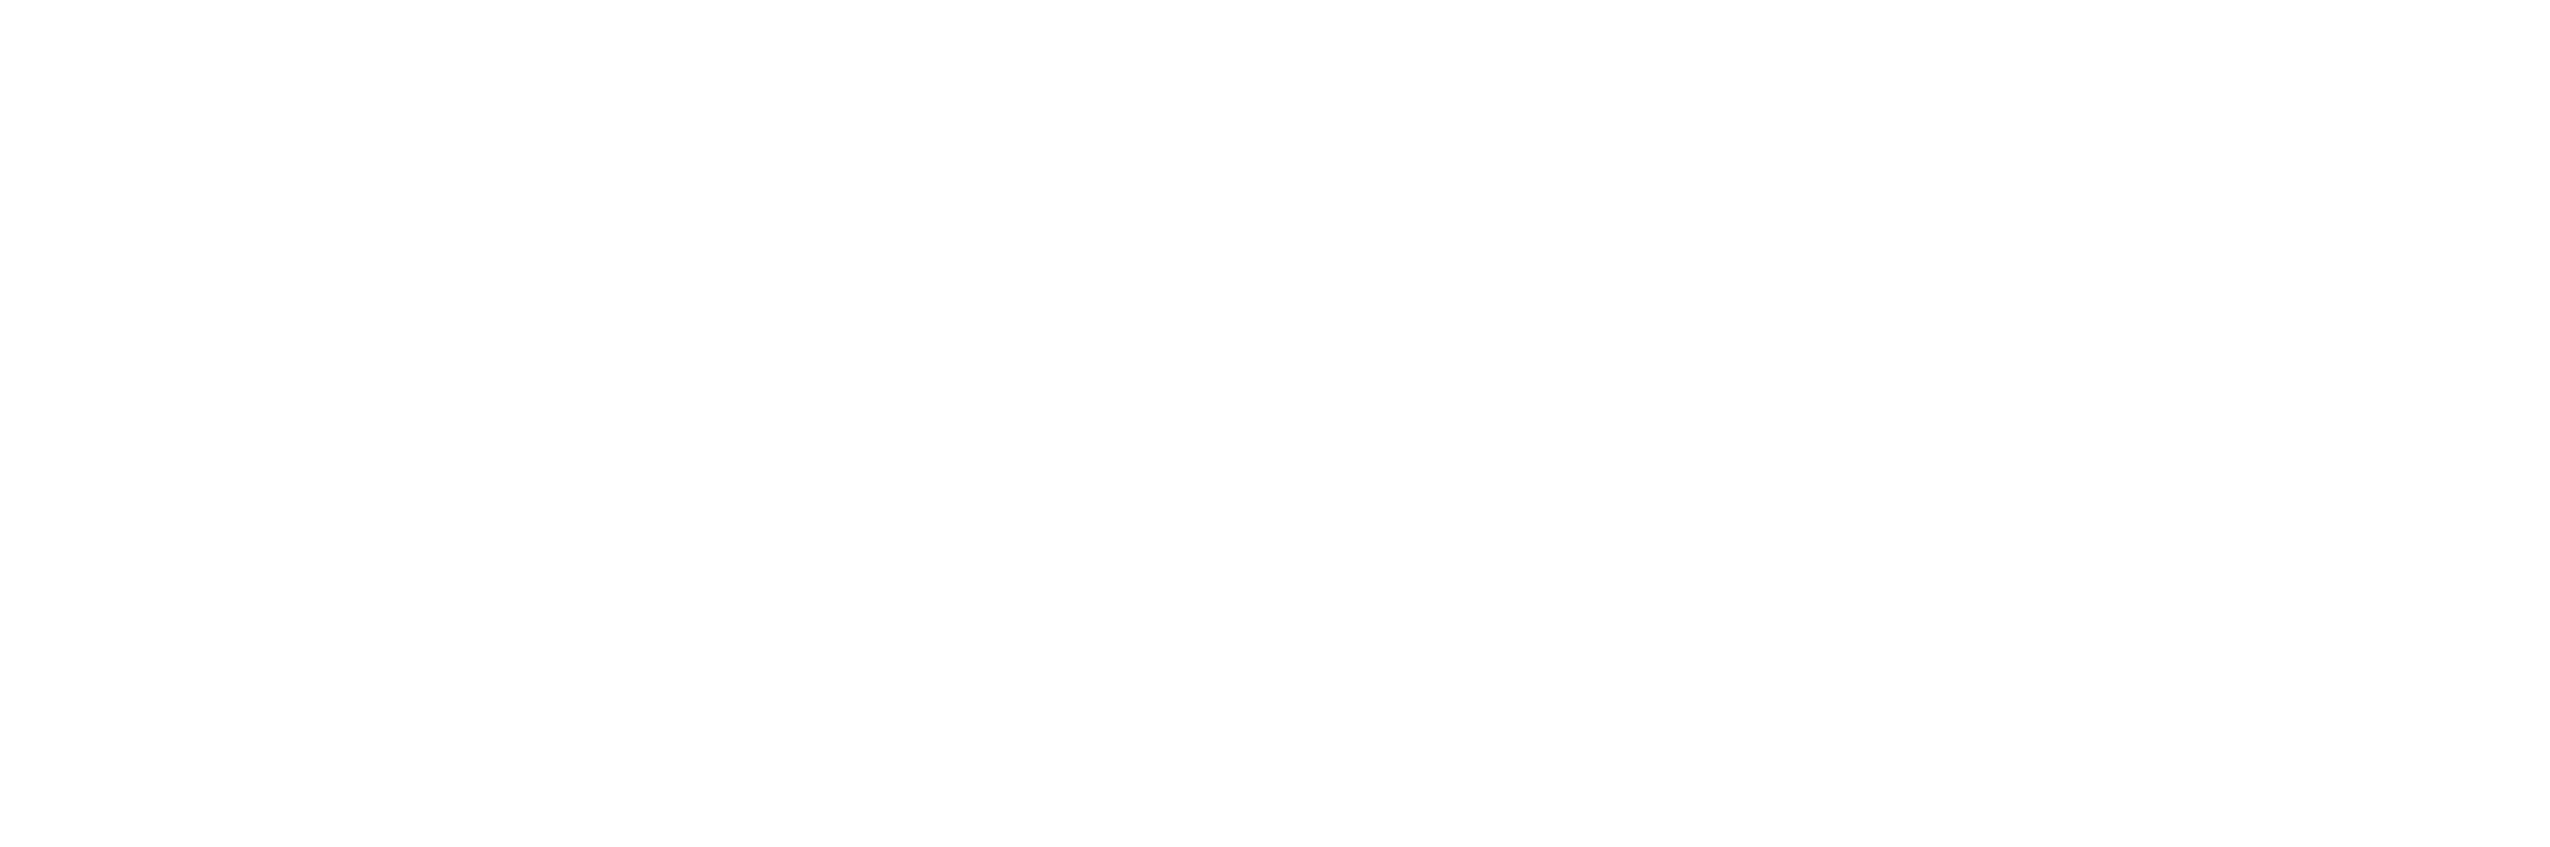 Max Healthcare Institute Logo groß für dunkle Hintergründe (transparentes PNG)